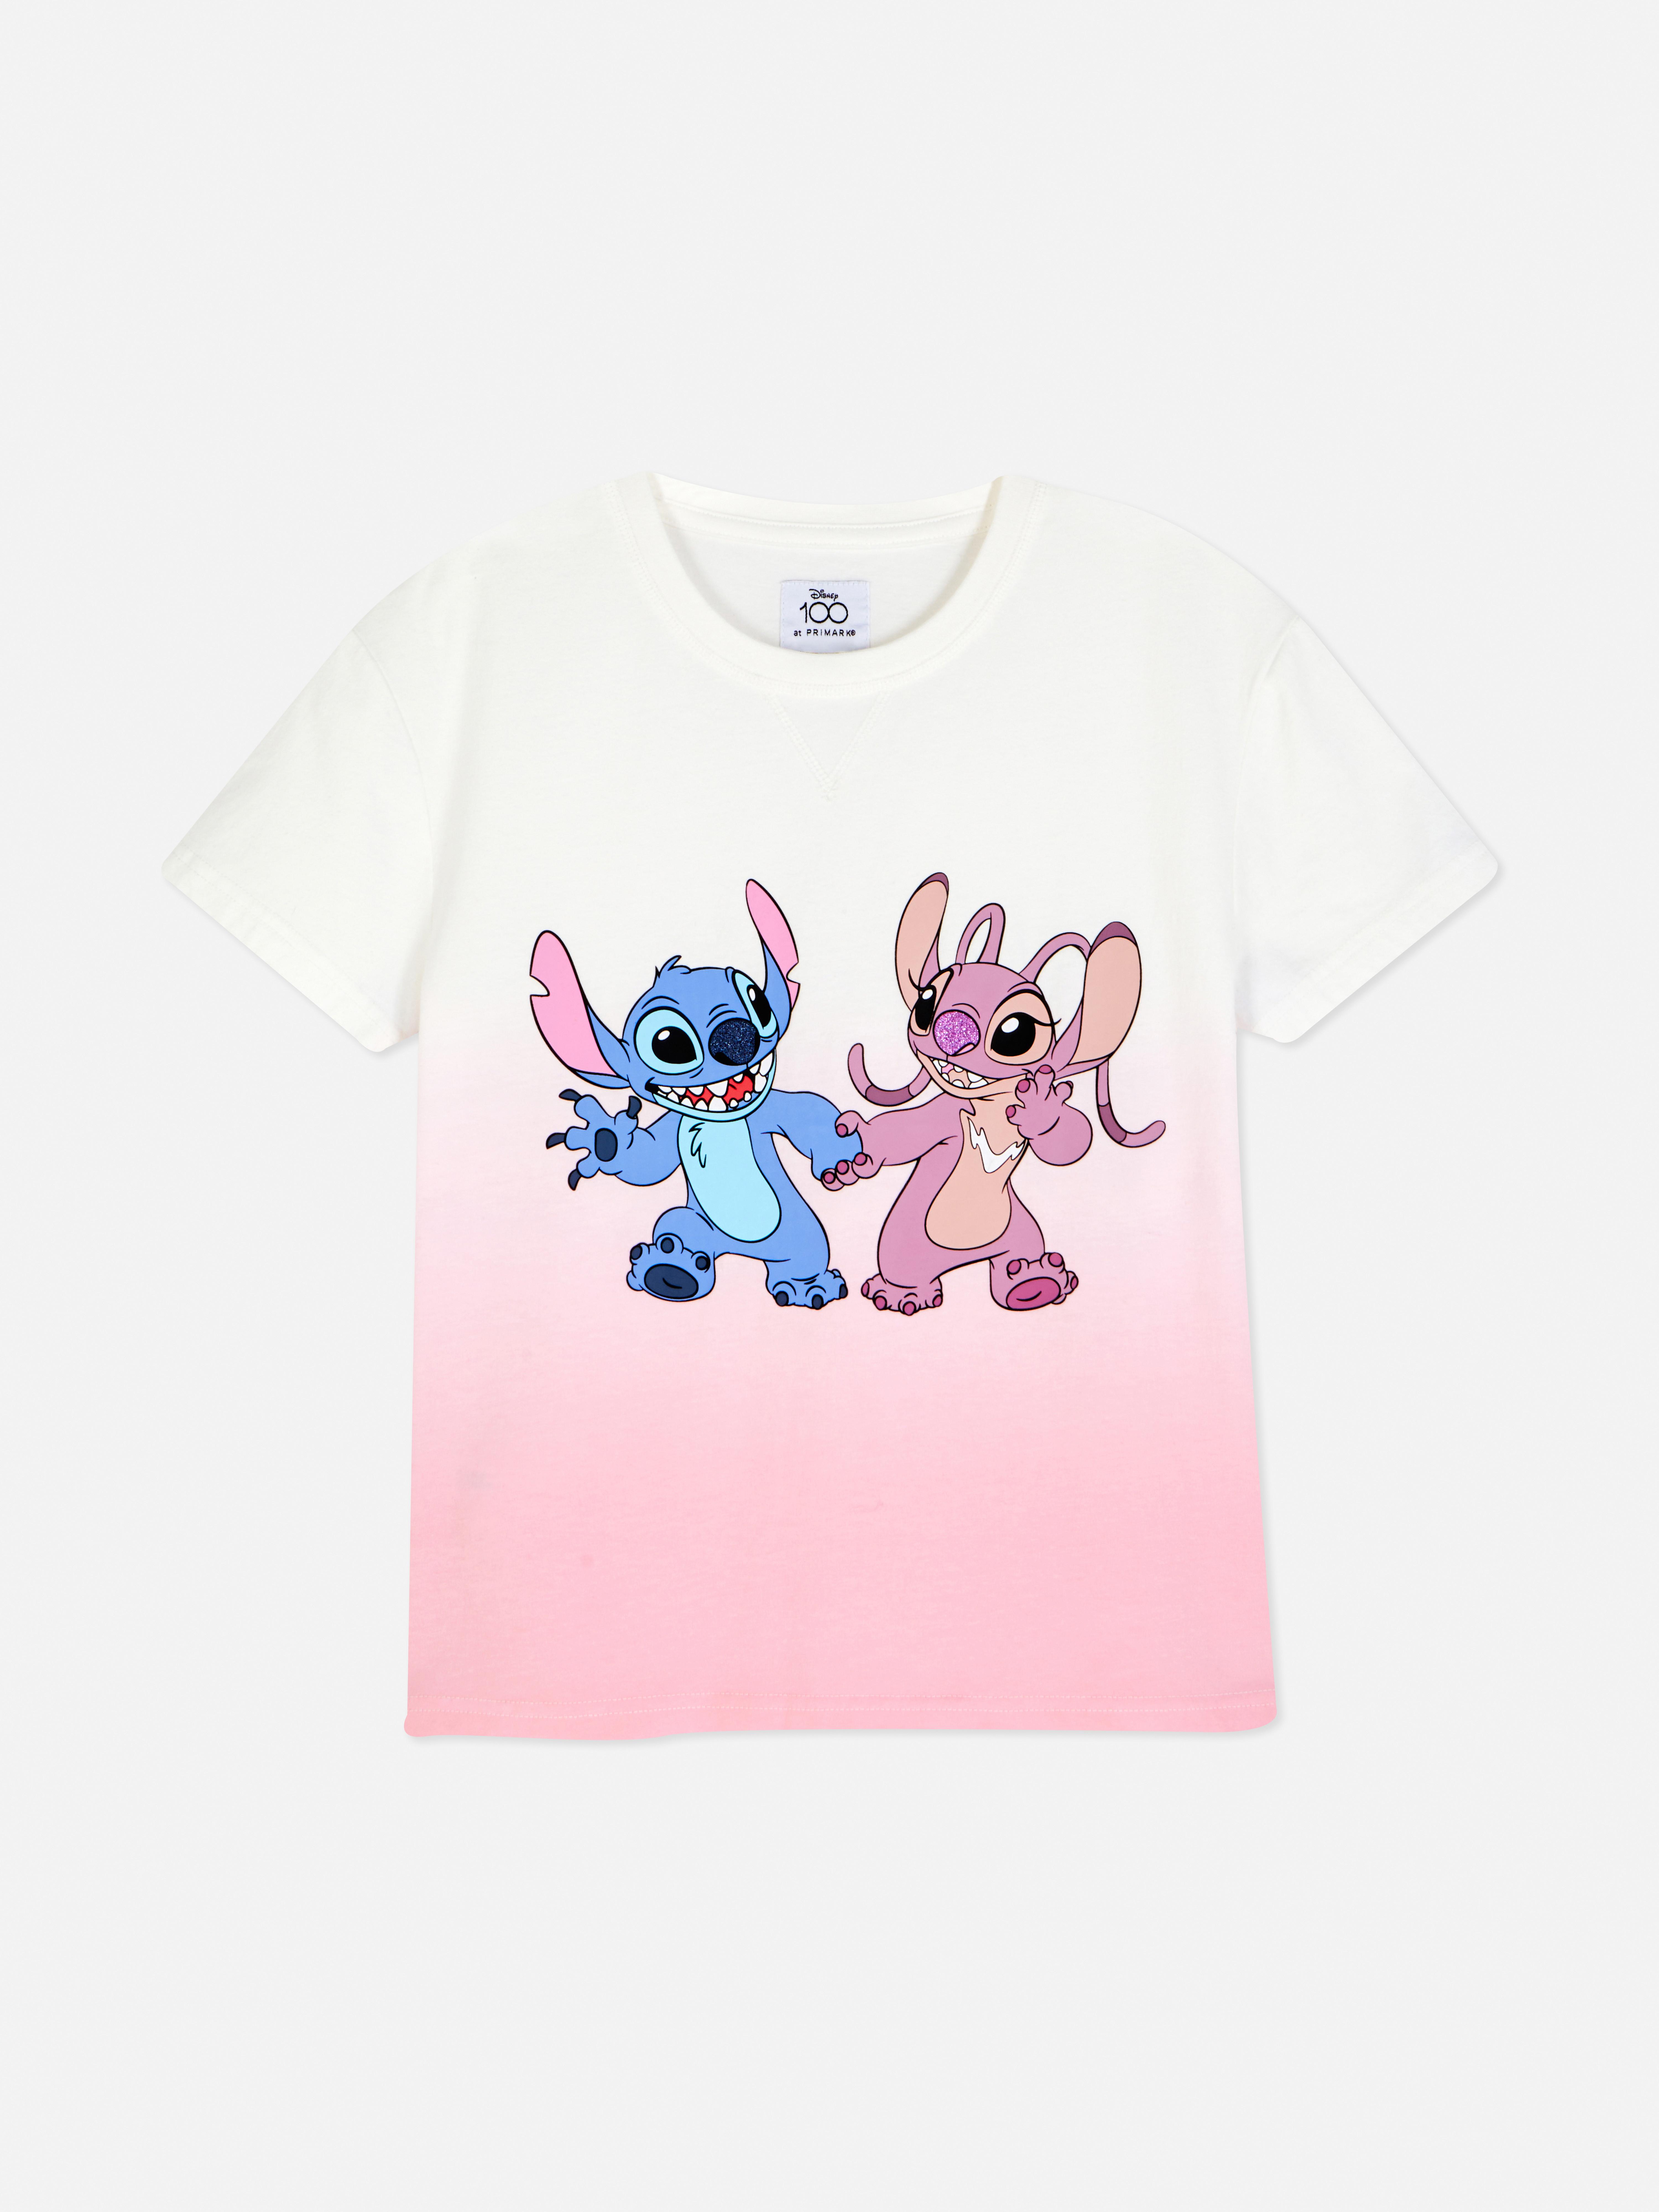 Disney's Lilo & Stitch Originals Ombré T-shirt